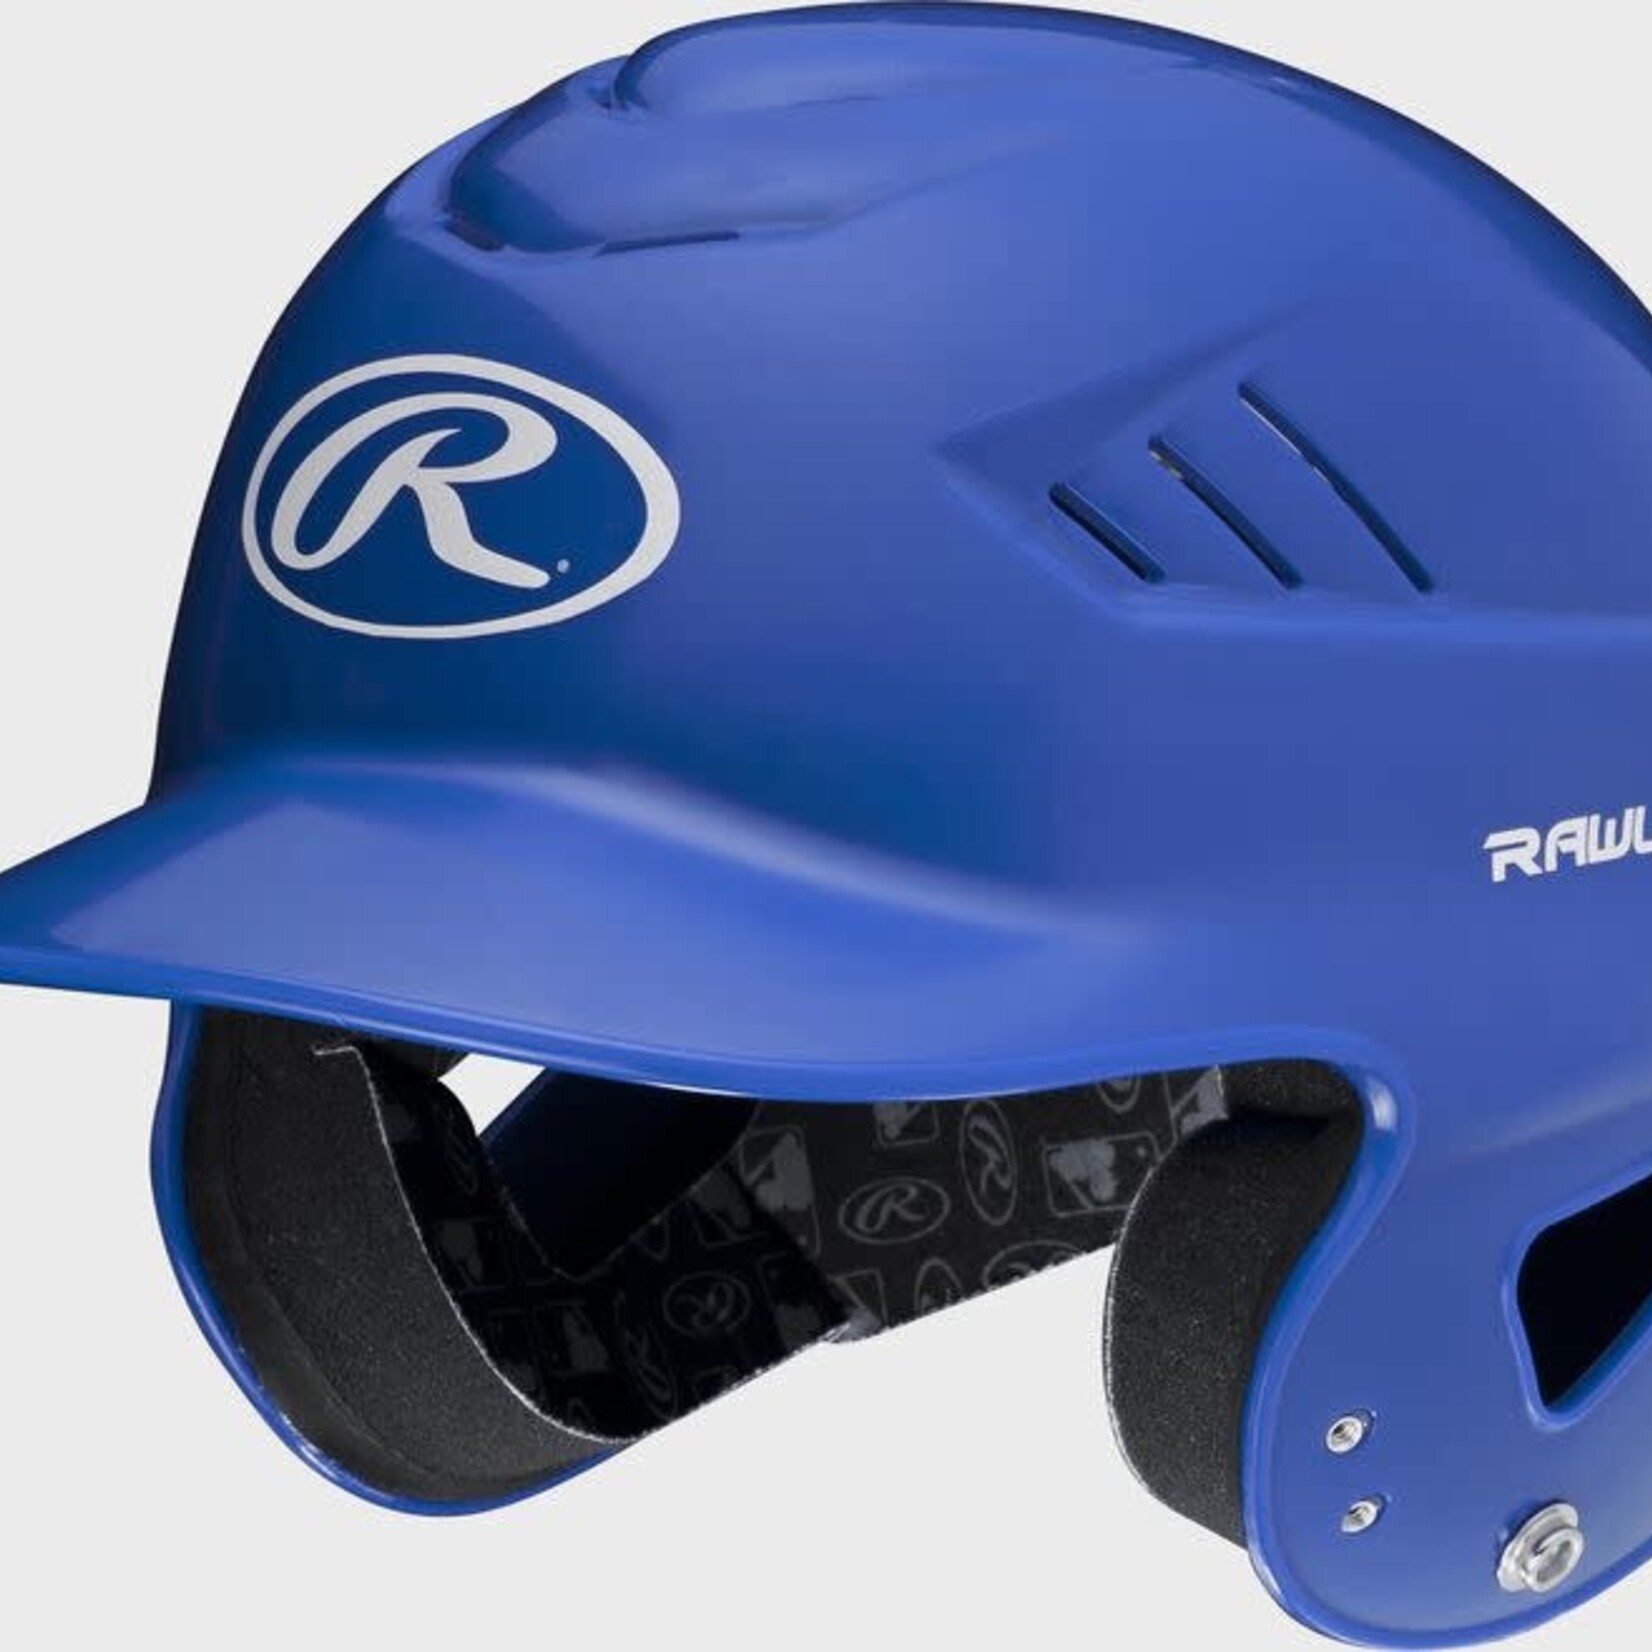 Rawlings Rawlings Batting Helmet, Coolflo, OS